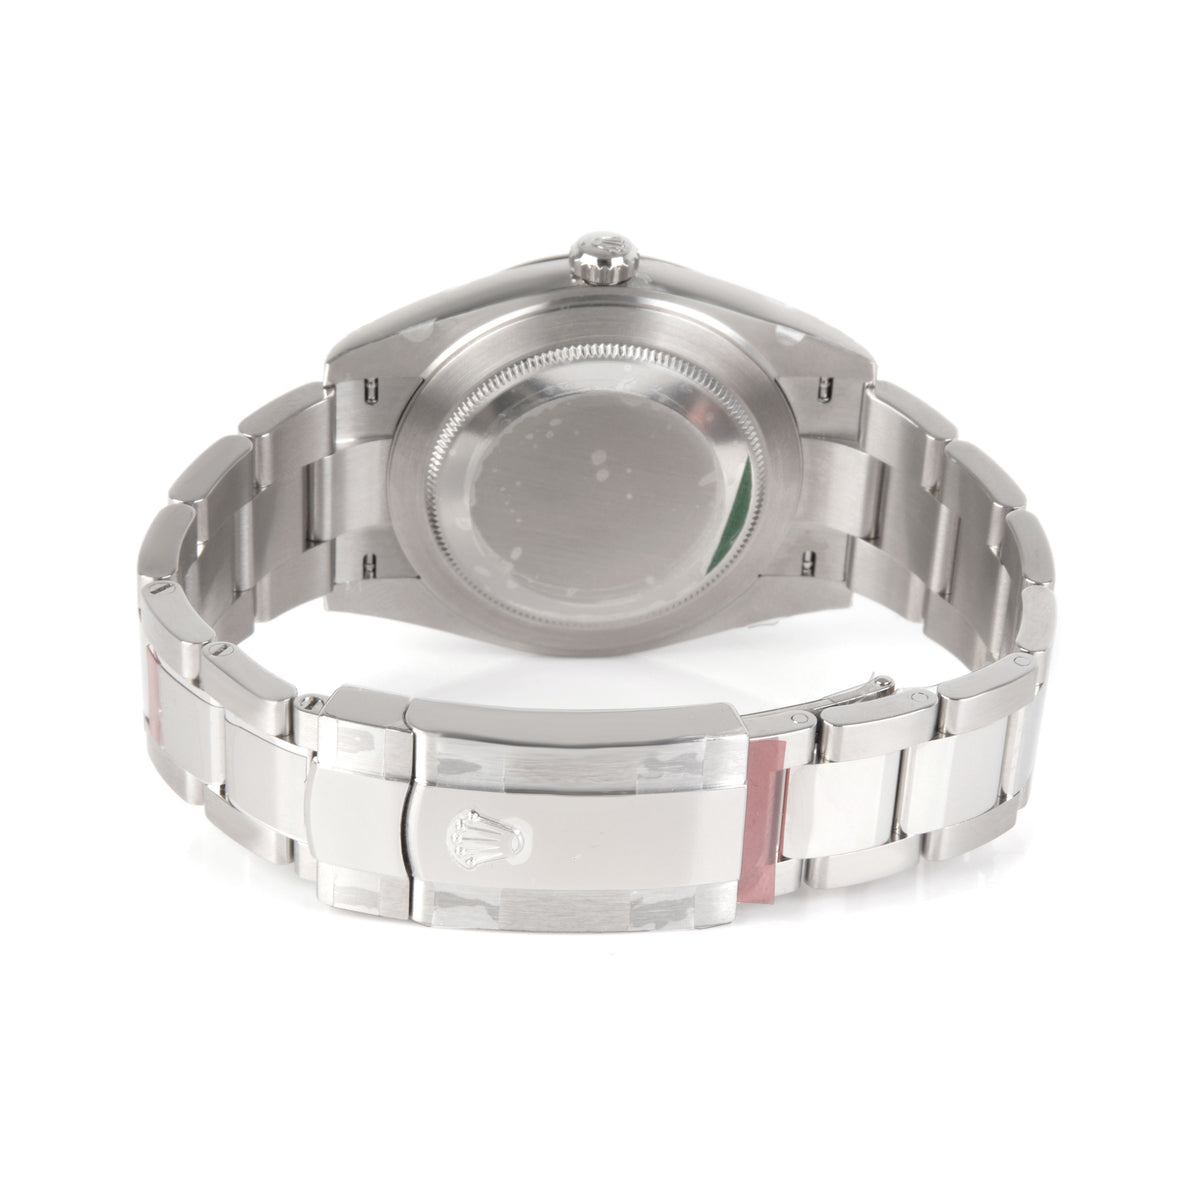 Rolex Datejust 126334 Men's Watch in 18kt Stainless Steel/White Gold